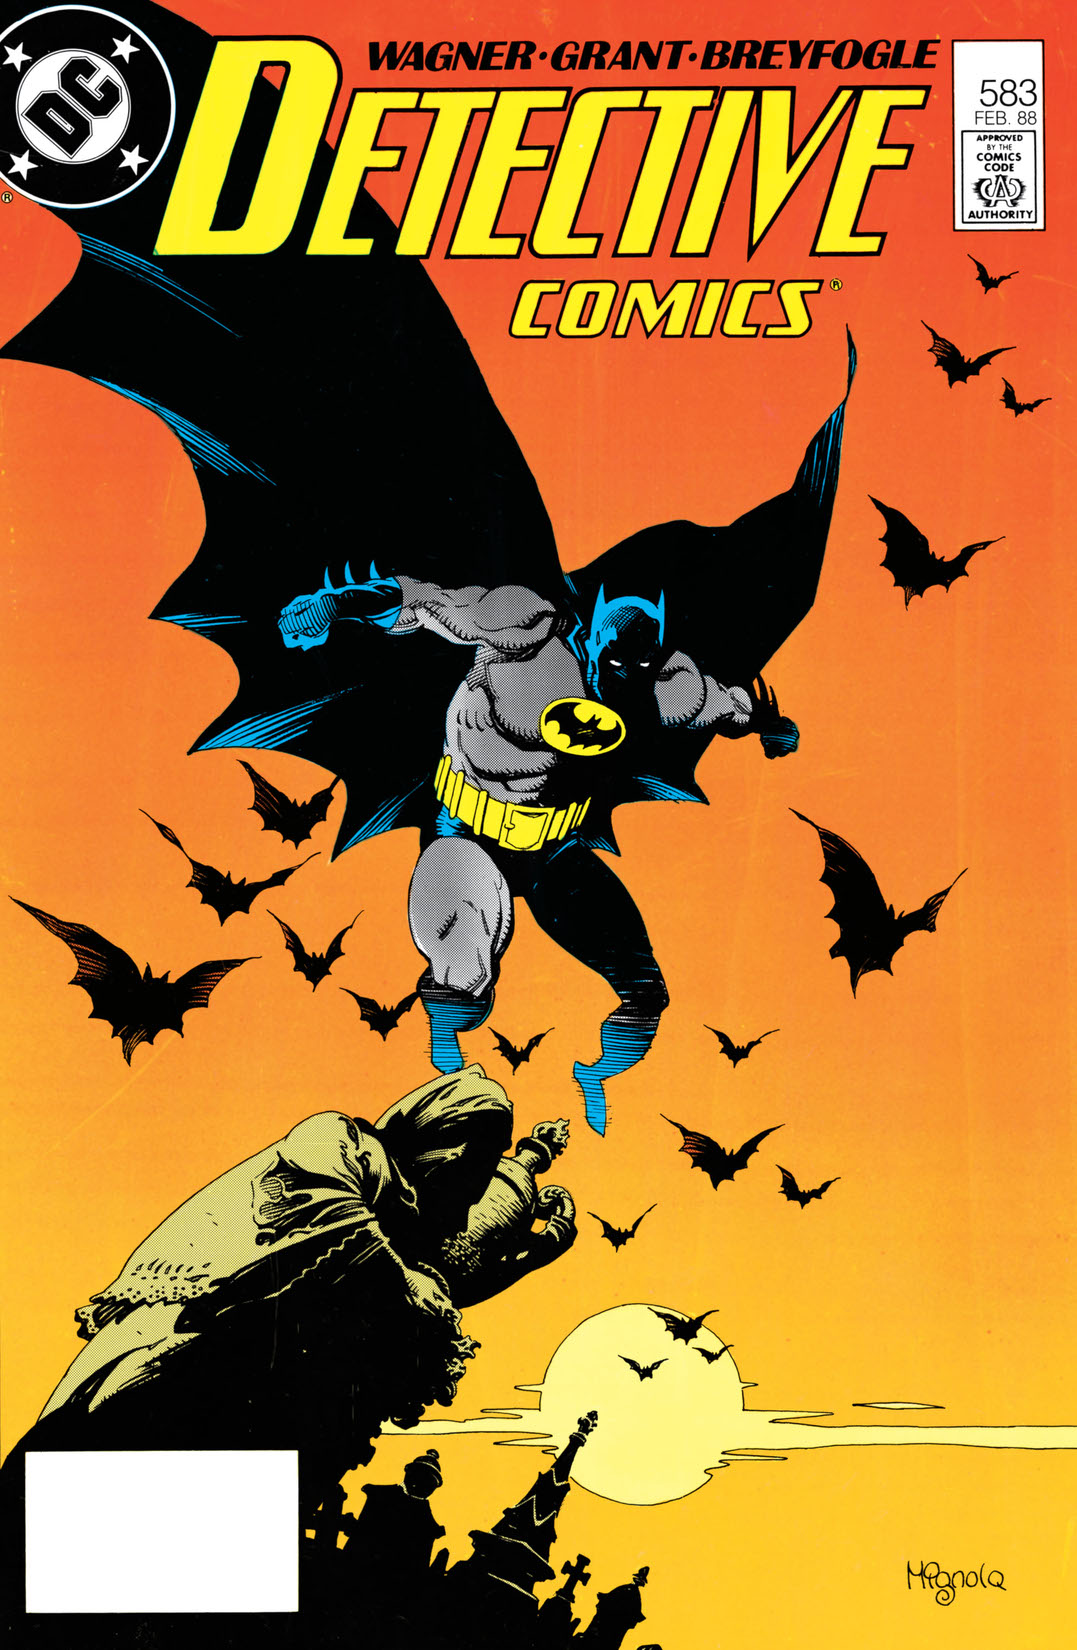 Detective Comics (1937-) #583 preview images